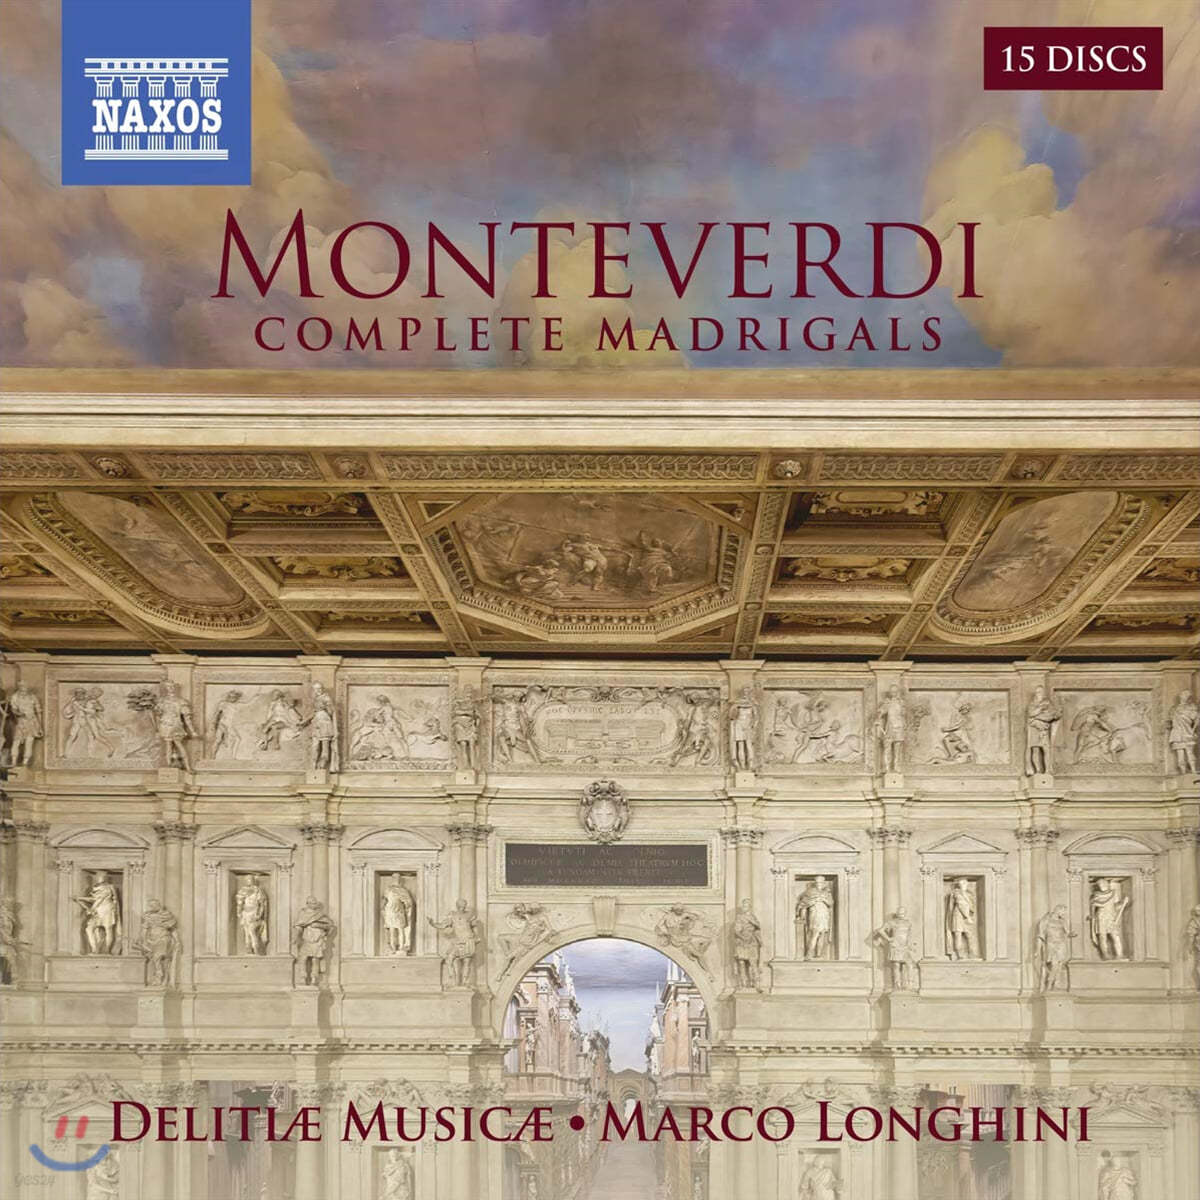 Marco Longhini 몬테 베르디: 마드리갈 전집 (Monteverdi: Complete Madrigals)